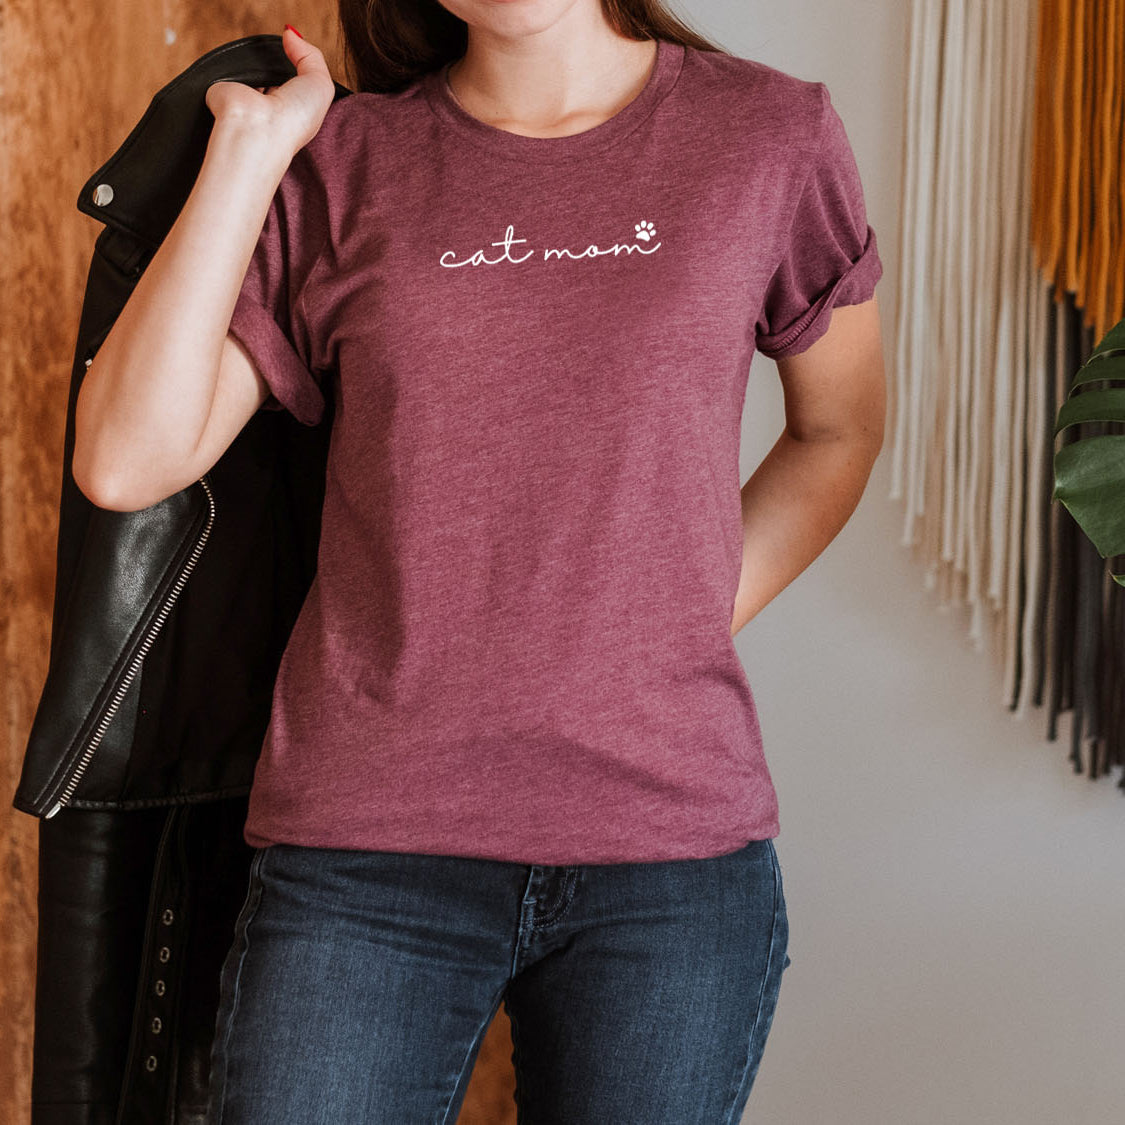 Cat Mom Small Letters T-shirt - Fun Pet Love Minimal Design Printed Tee Shirt